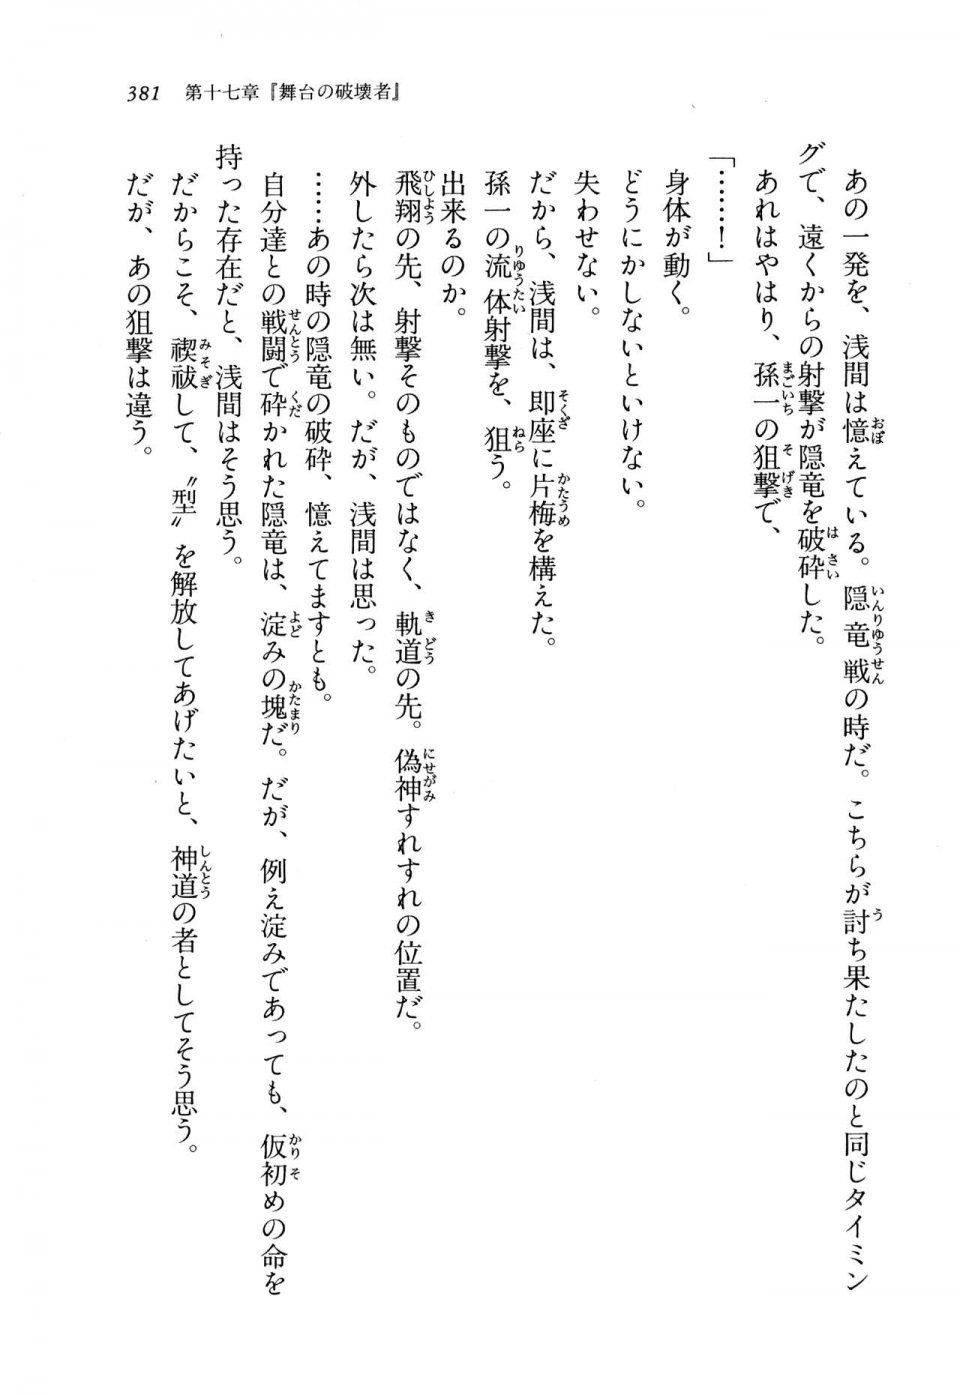 Kyoukai Senjou no Horizon BD Special Mininovel Vol 8(4B) - Photo #385